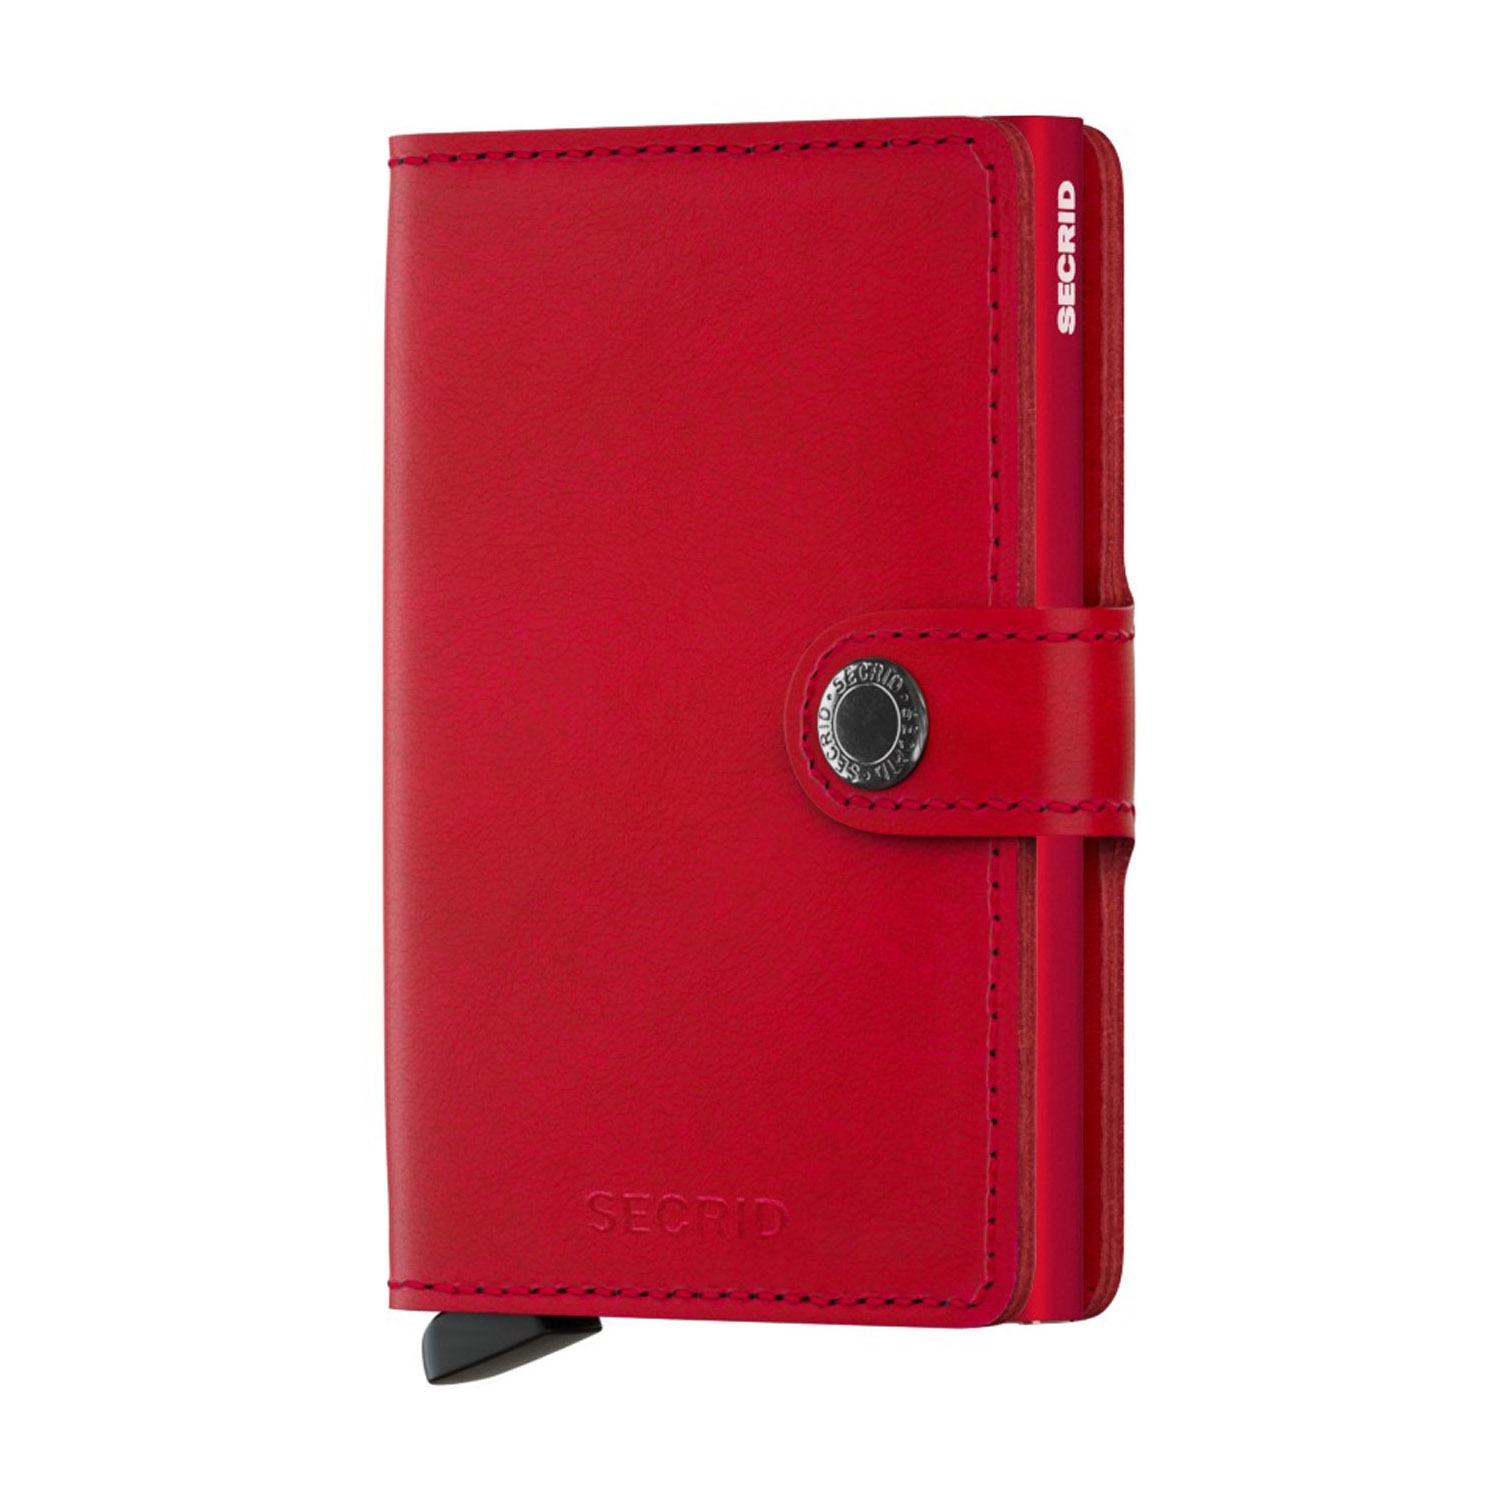 Photos - Wallet Secrid Red Leather Miniwallet